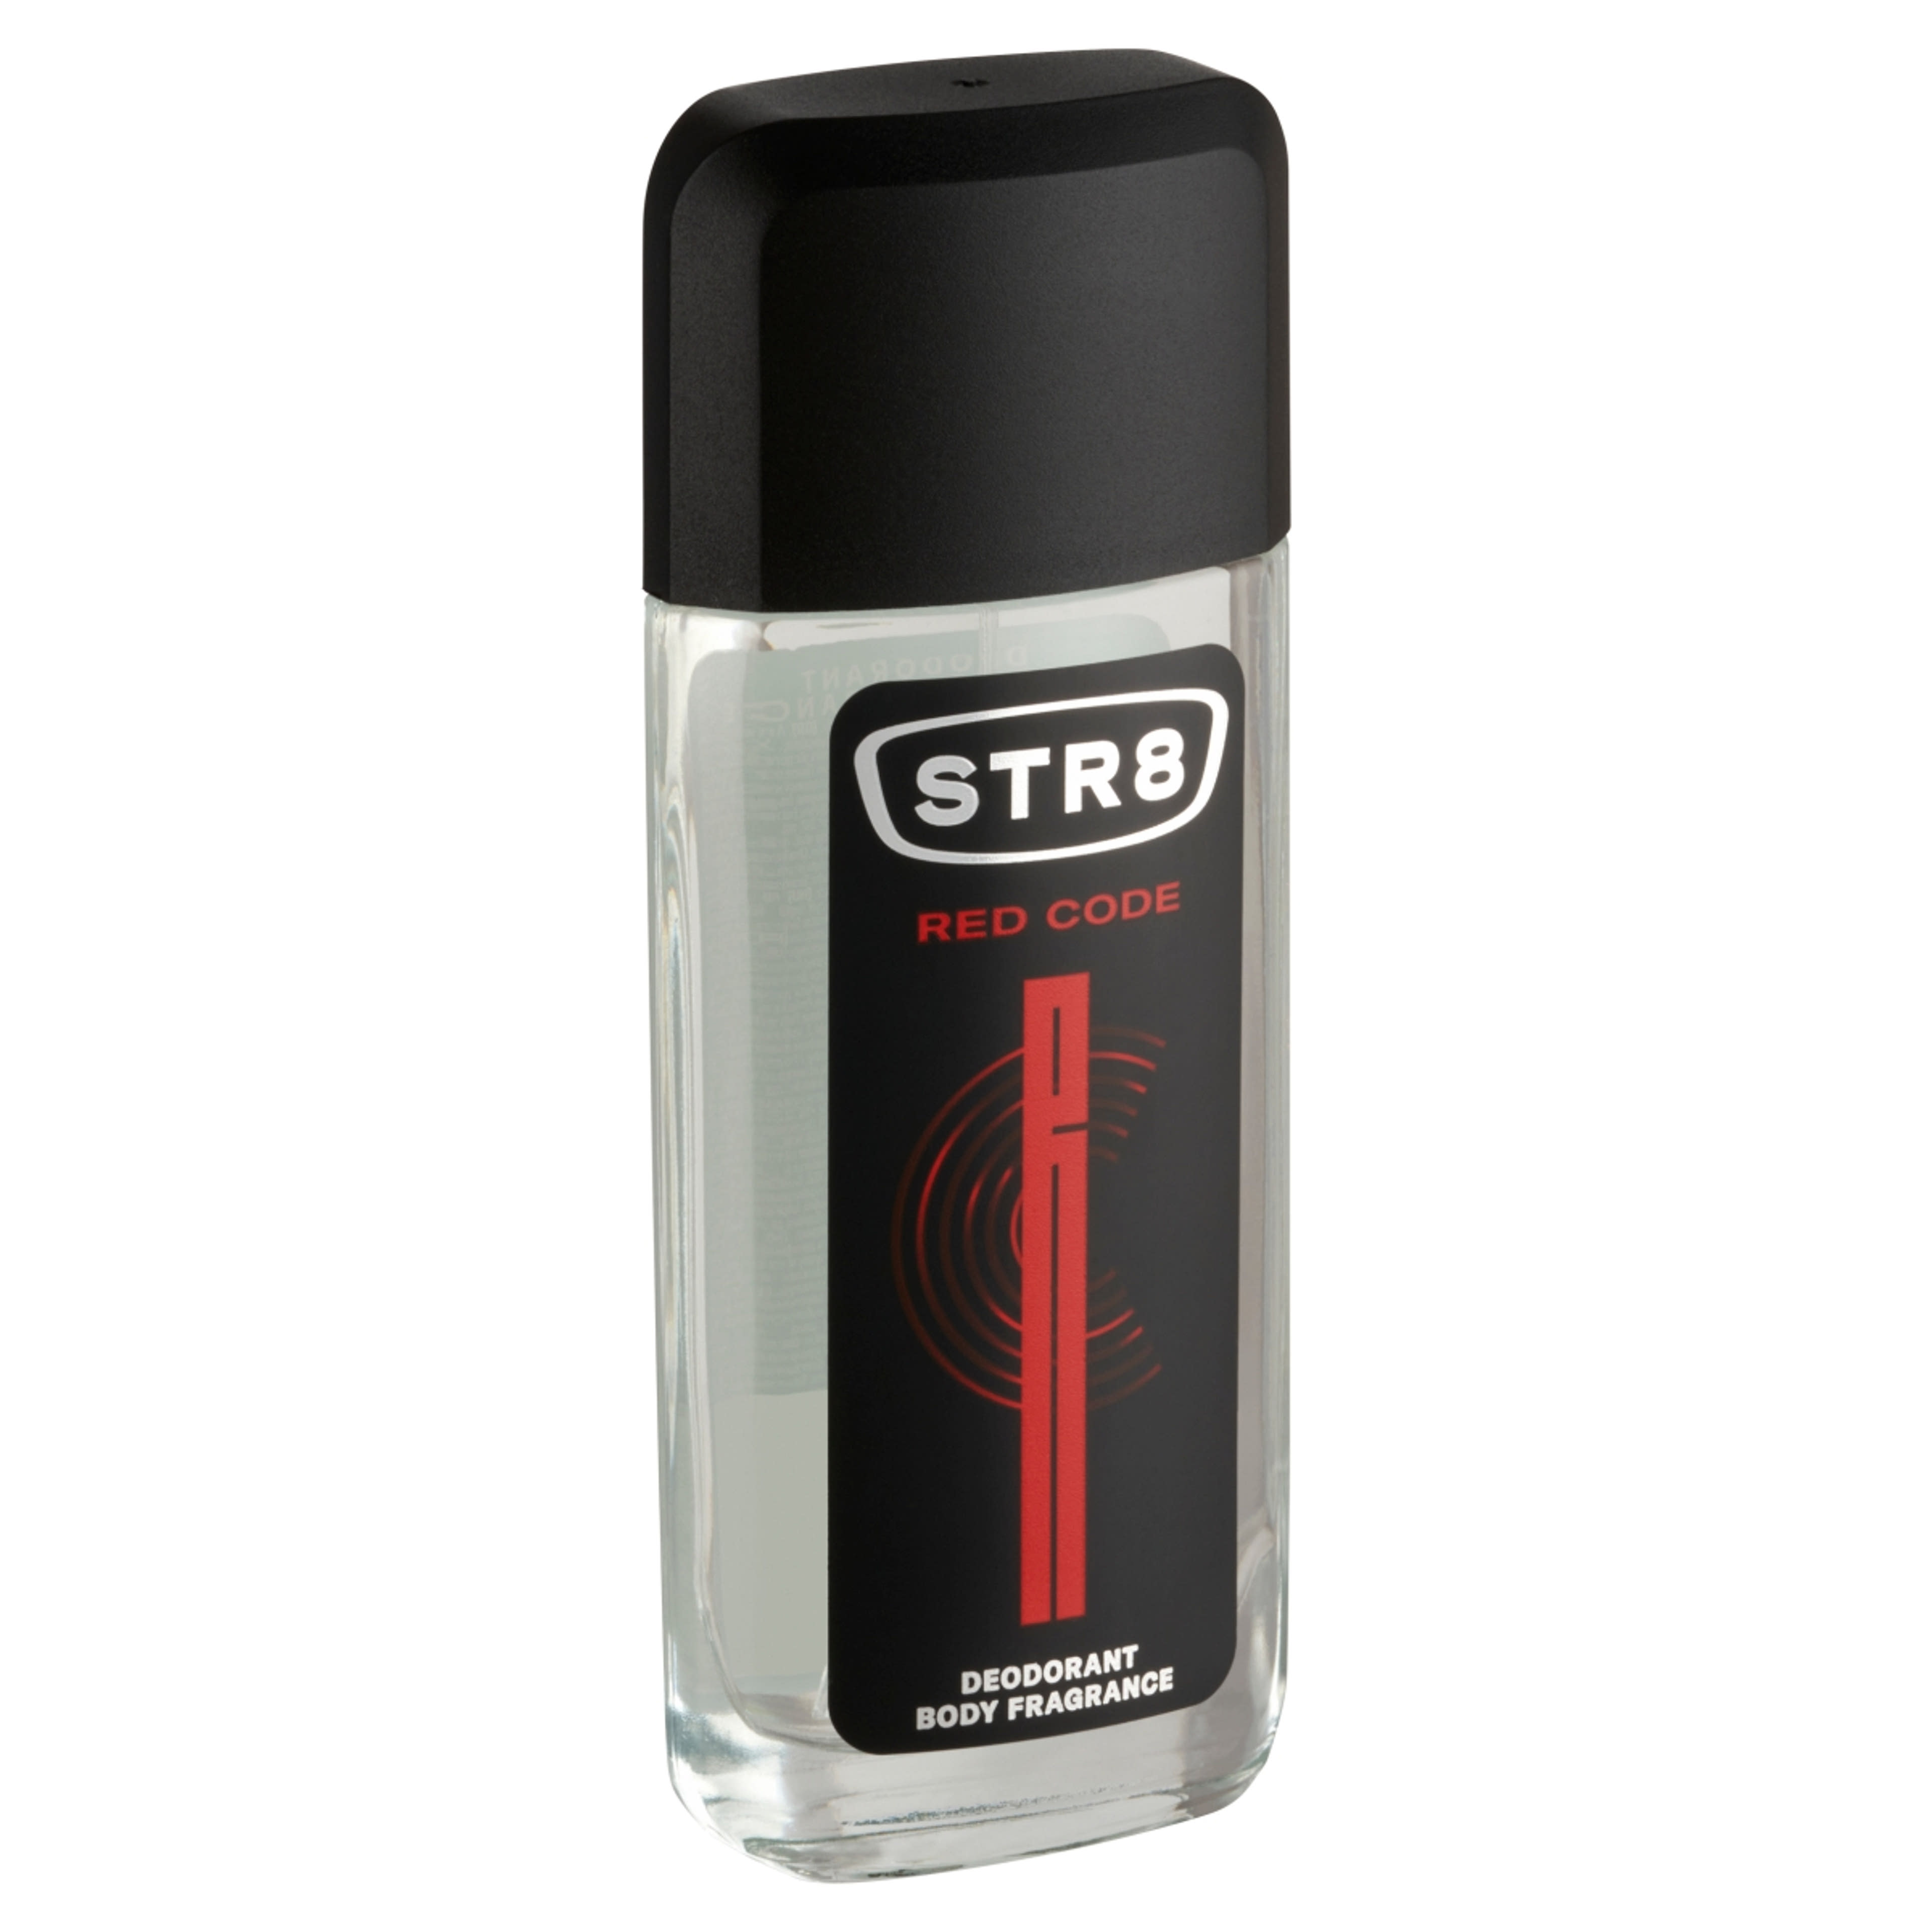 STR8 Red Code Body Fragrance parfüm spray - 85 ml-3